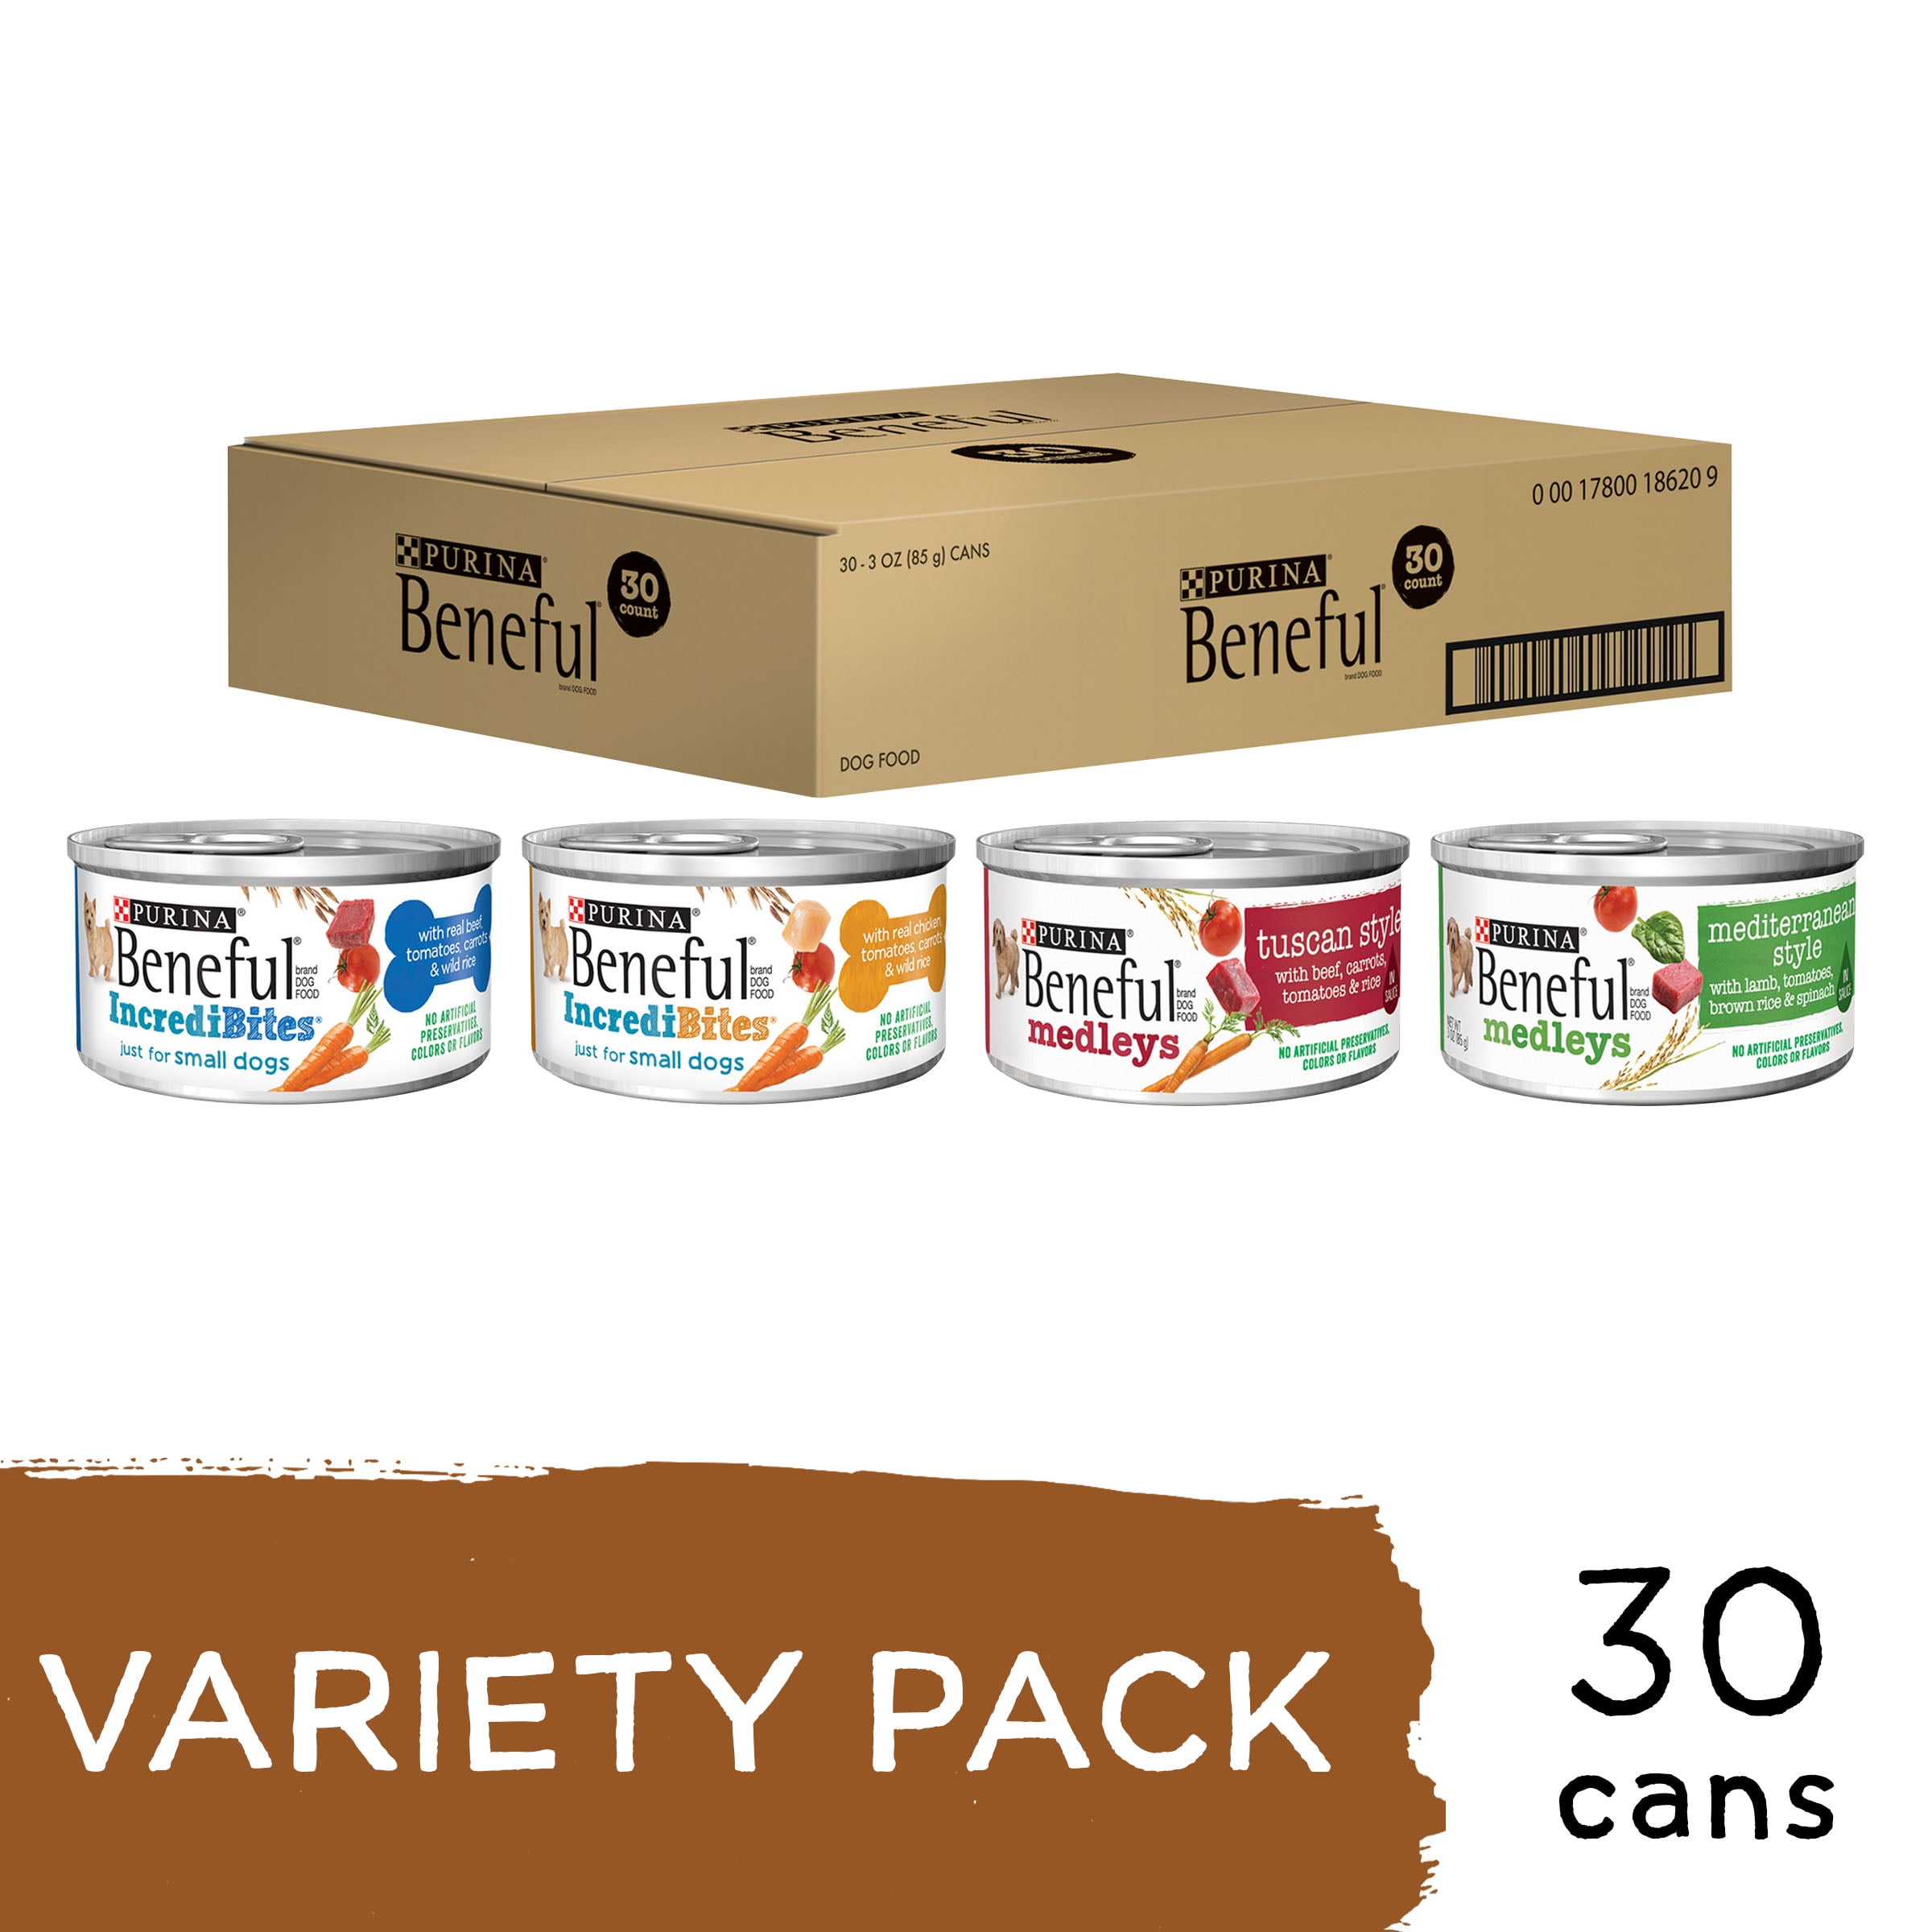 purina beneful medleys dog food variety pack